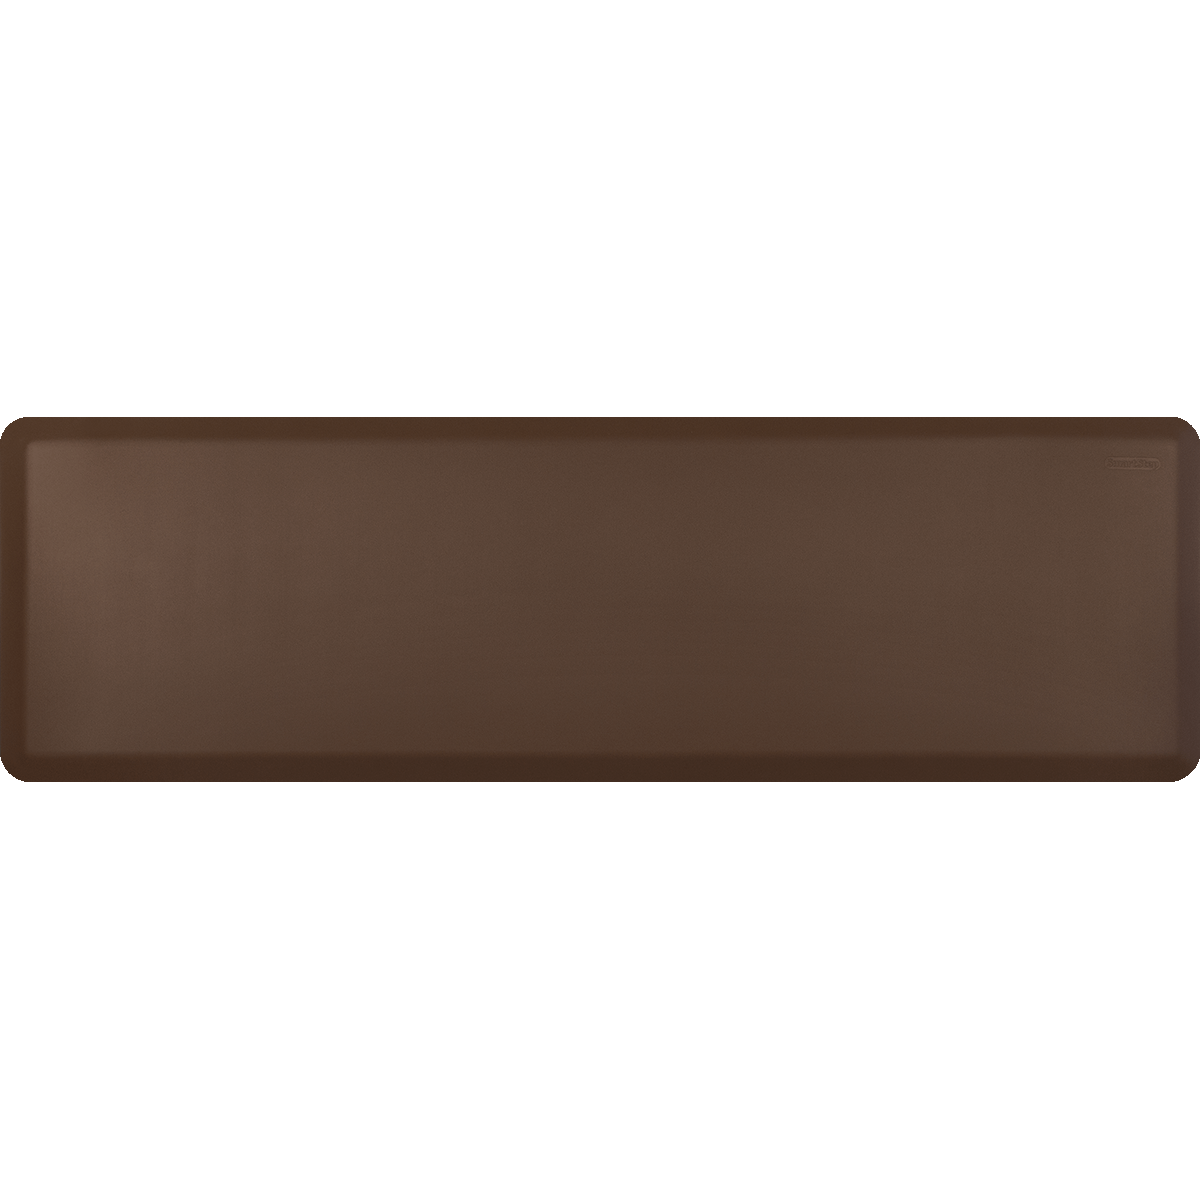 Smart Step Select Hc6sbrn Suede Premium Comfort Mat, 66 X 20 In. - Cocoa